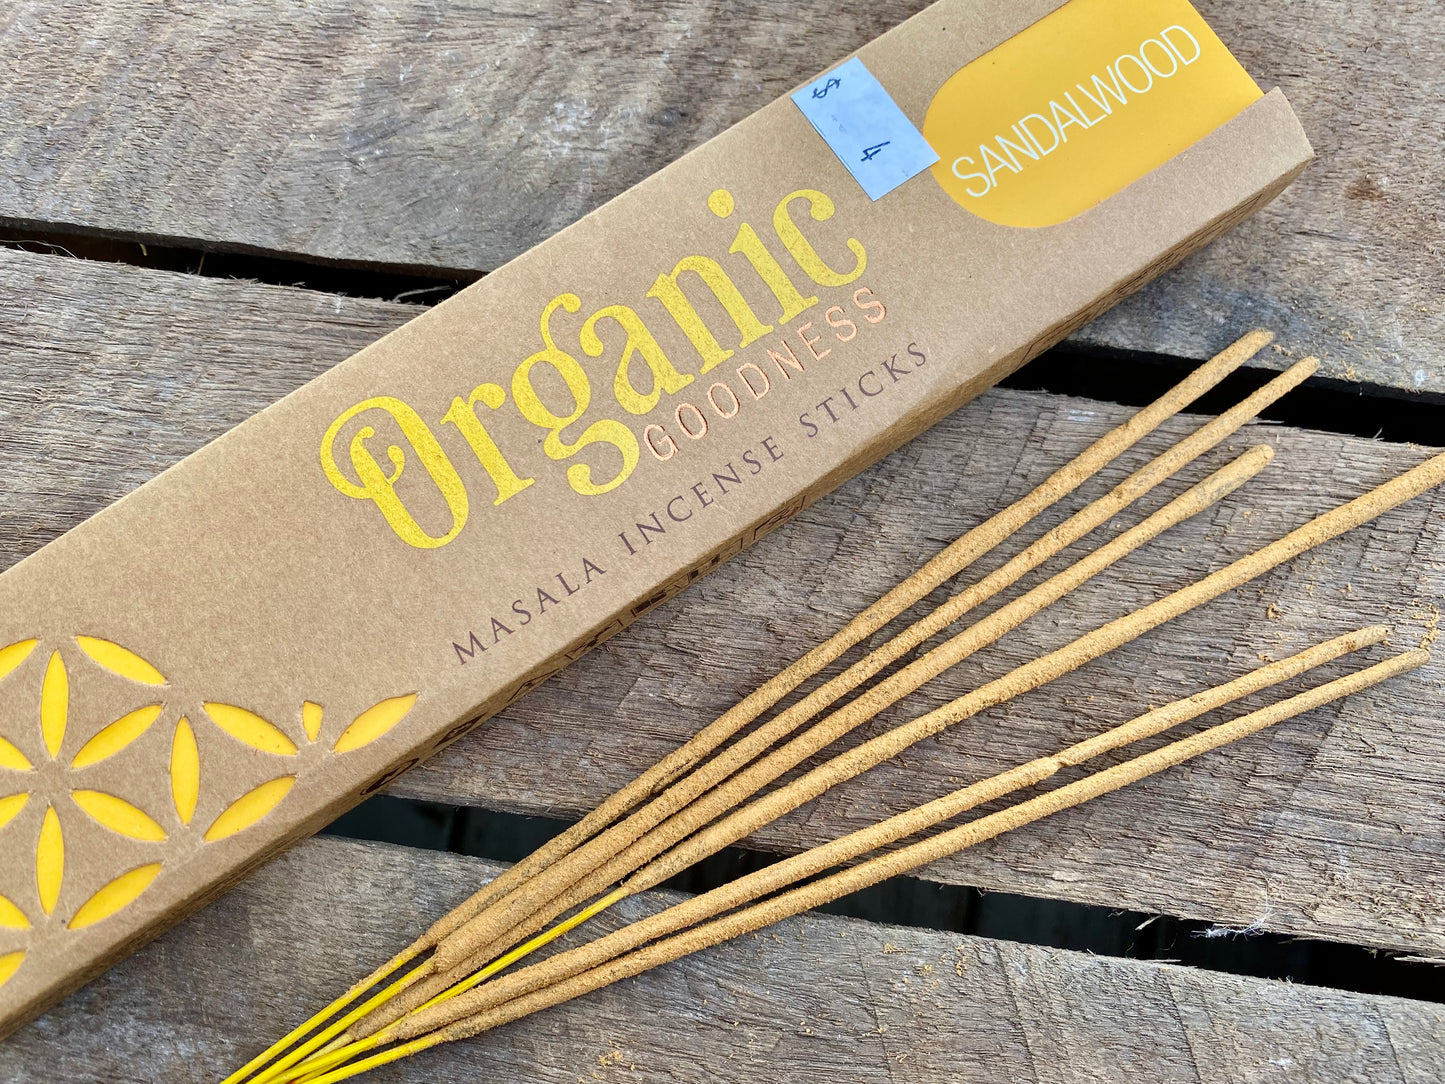 Organic Goodness Incense Sticks - Sandalwood